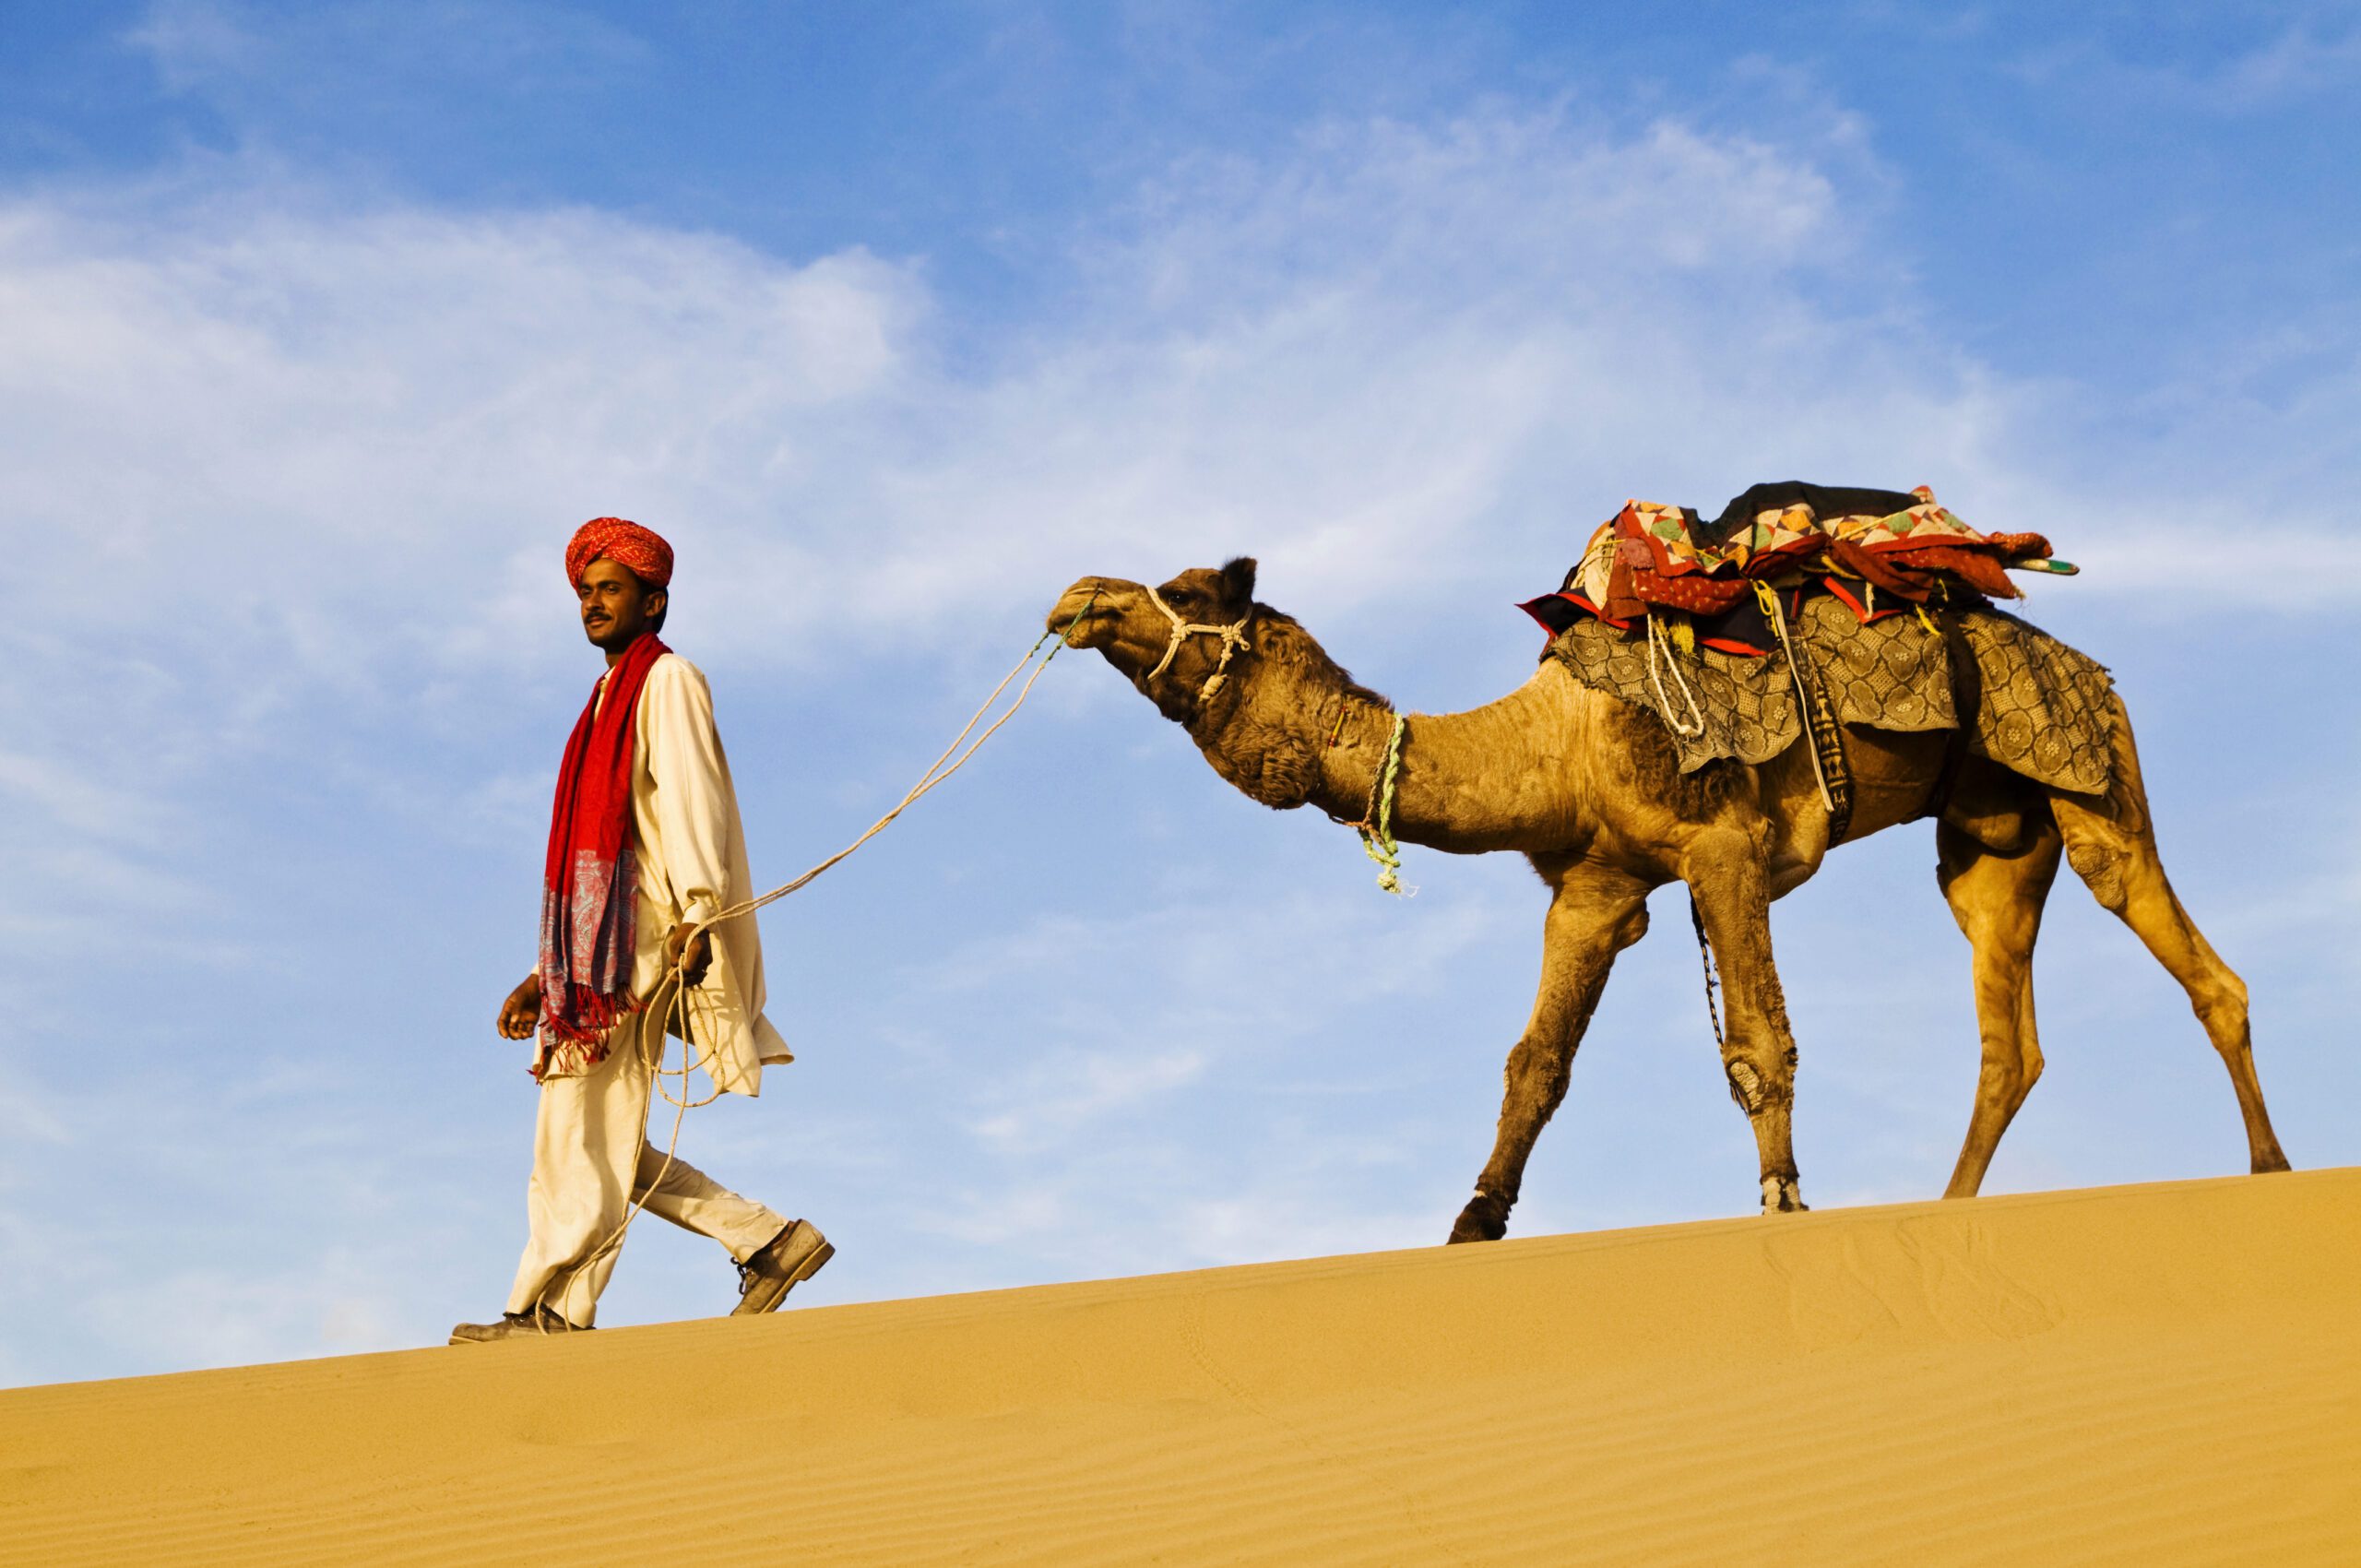 Indian man walking through the desert with his camel